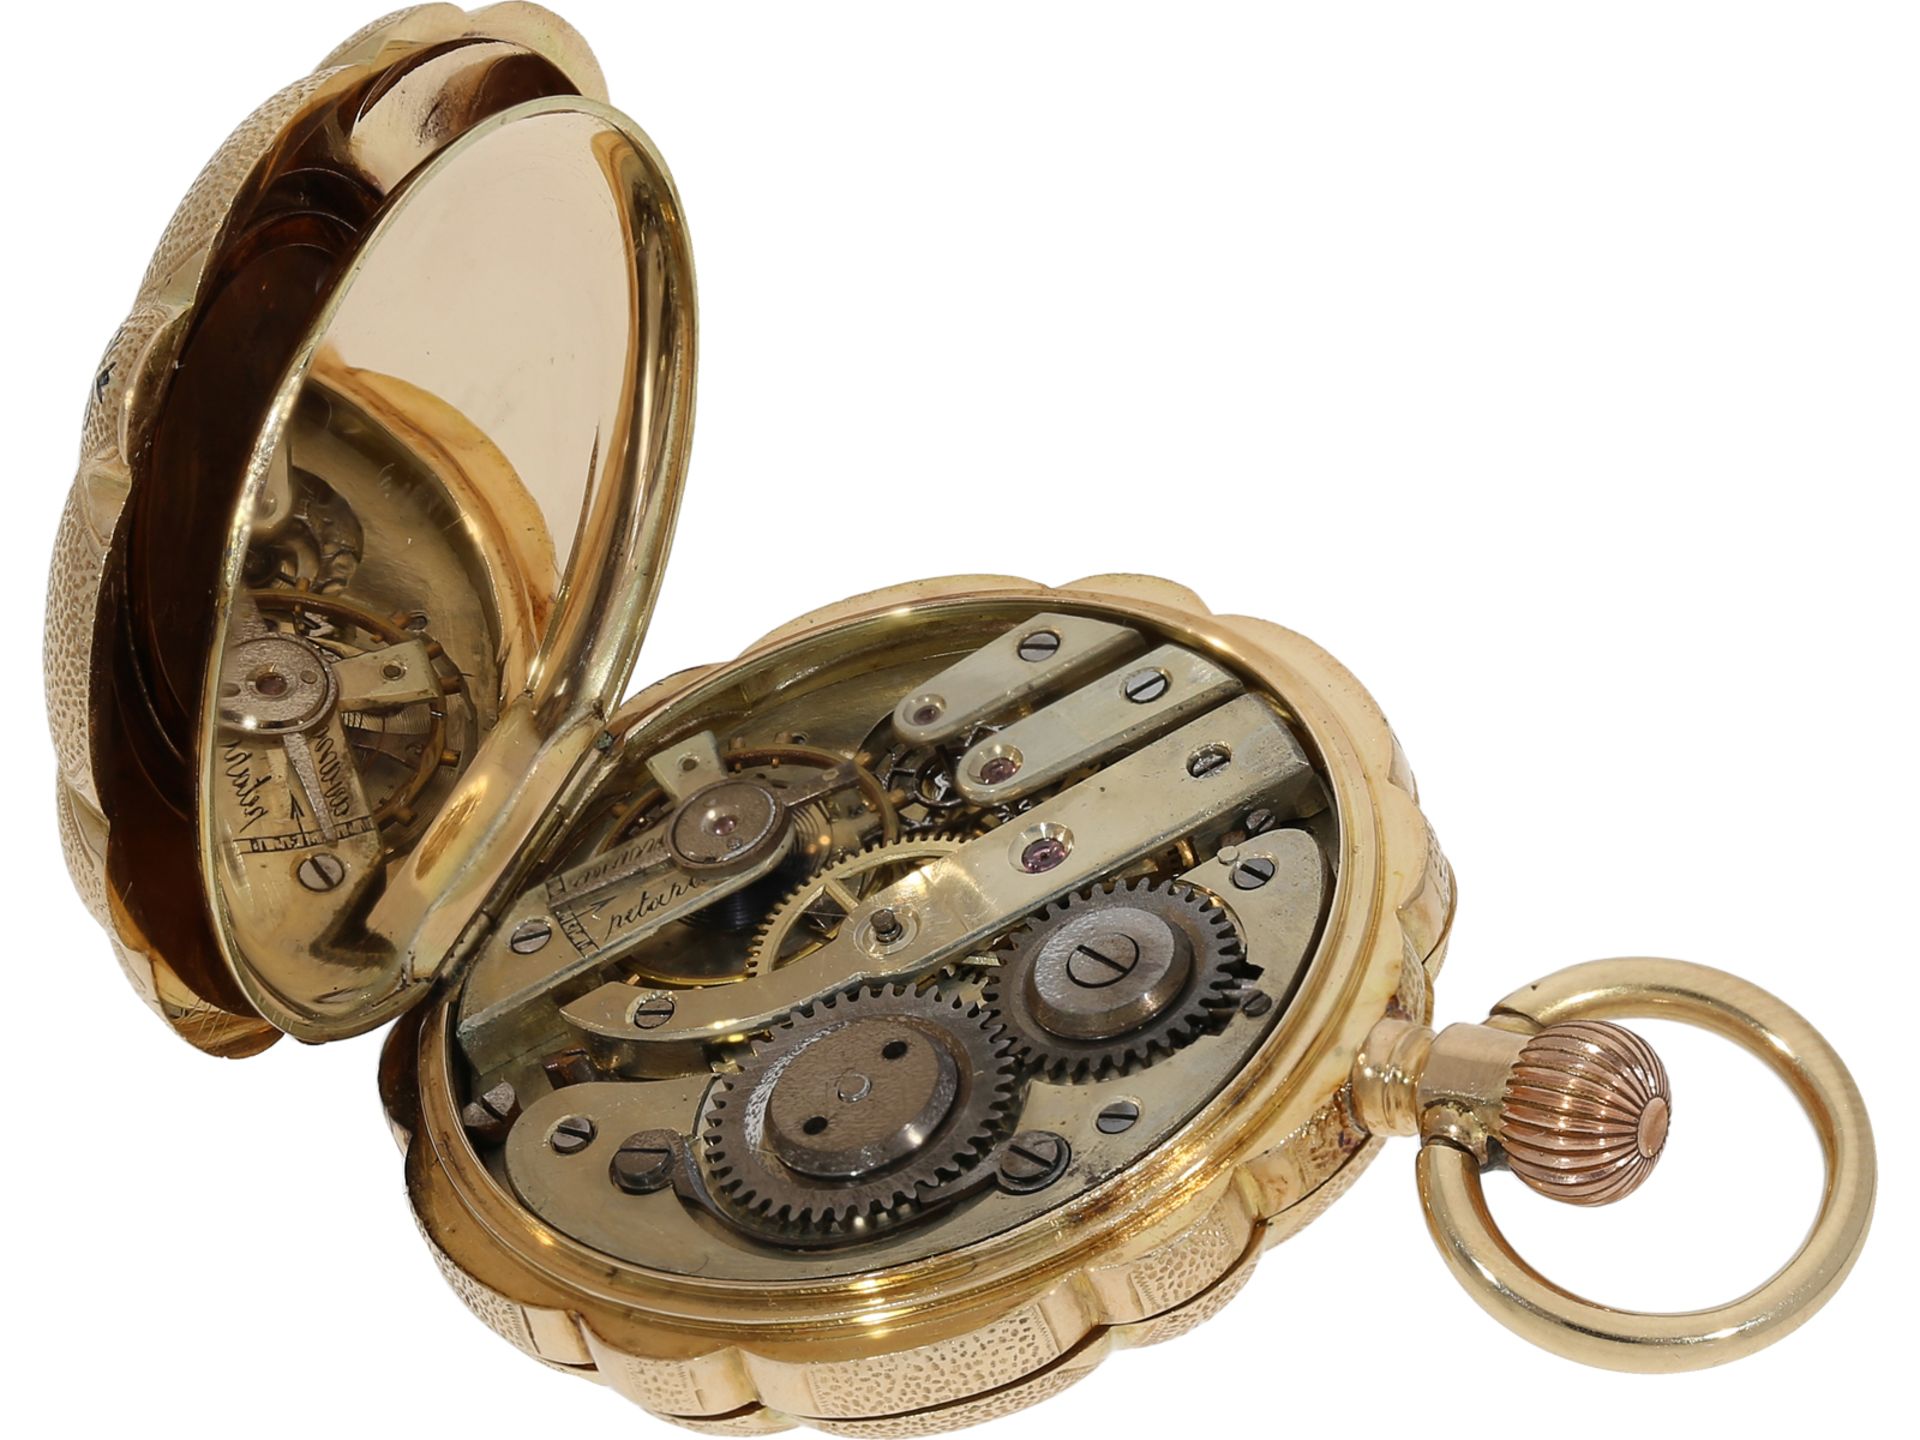 Pocket watch: gold/enamel splendour hunting case watch set with diamonds, Monard Geneve, ca. 1870 - Image 6 of 8